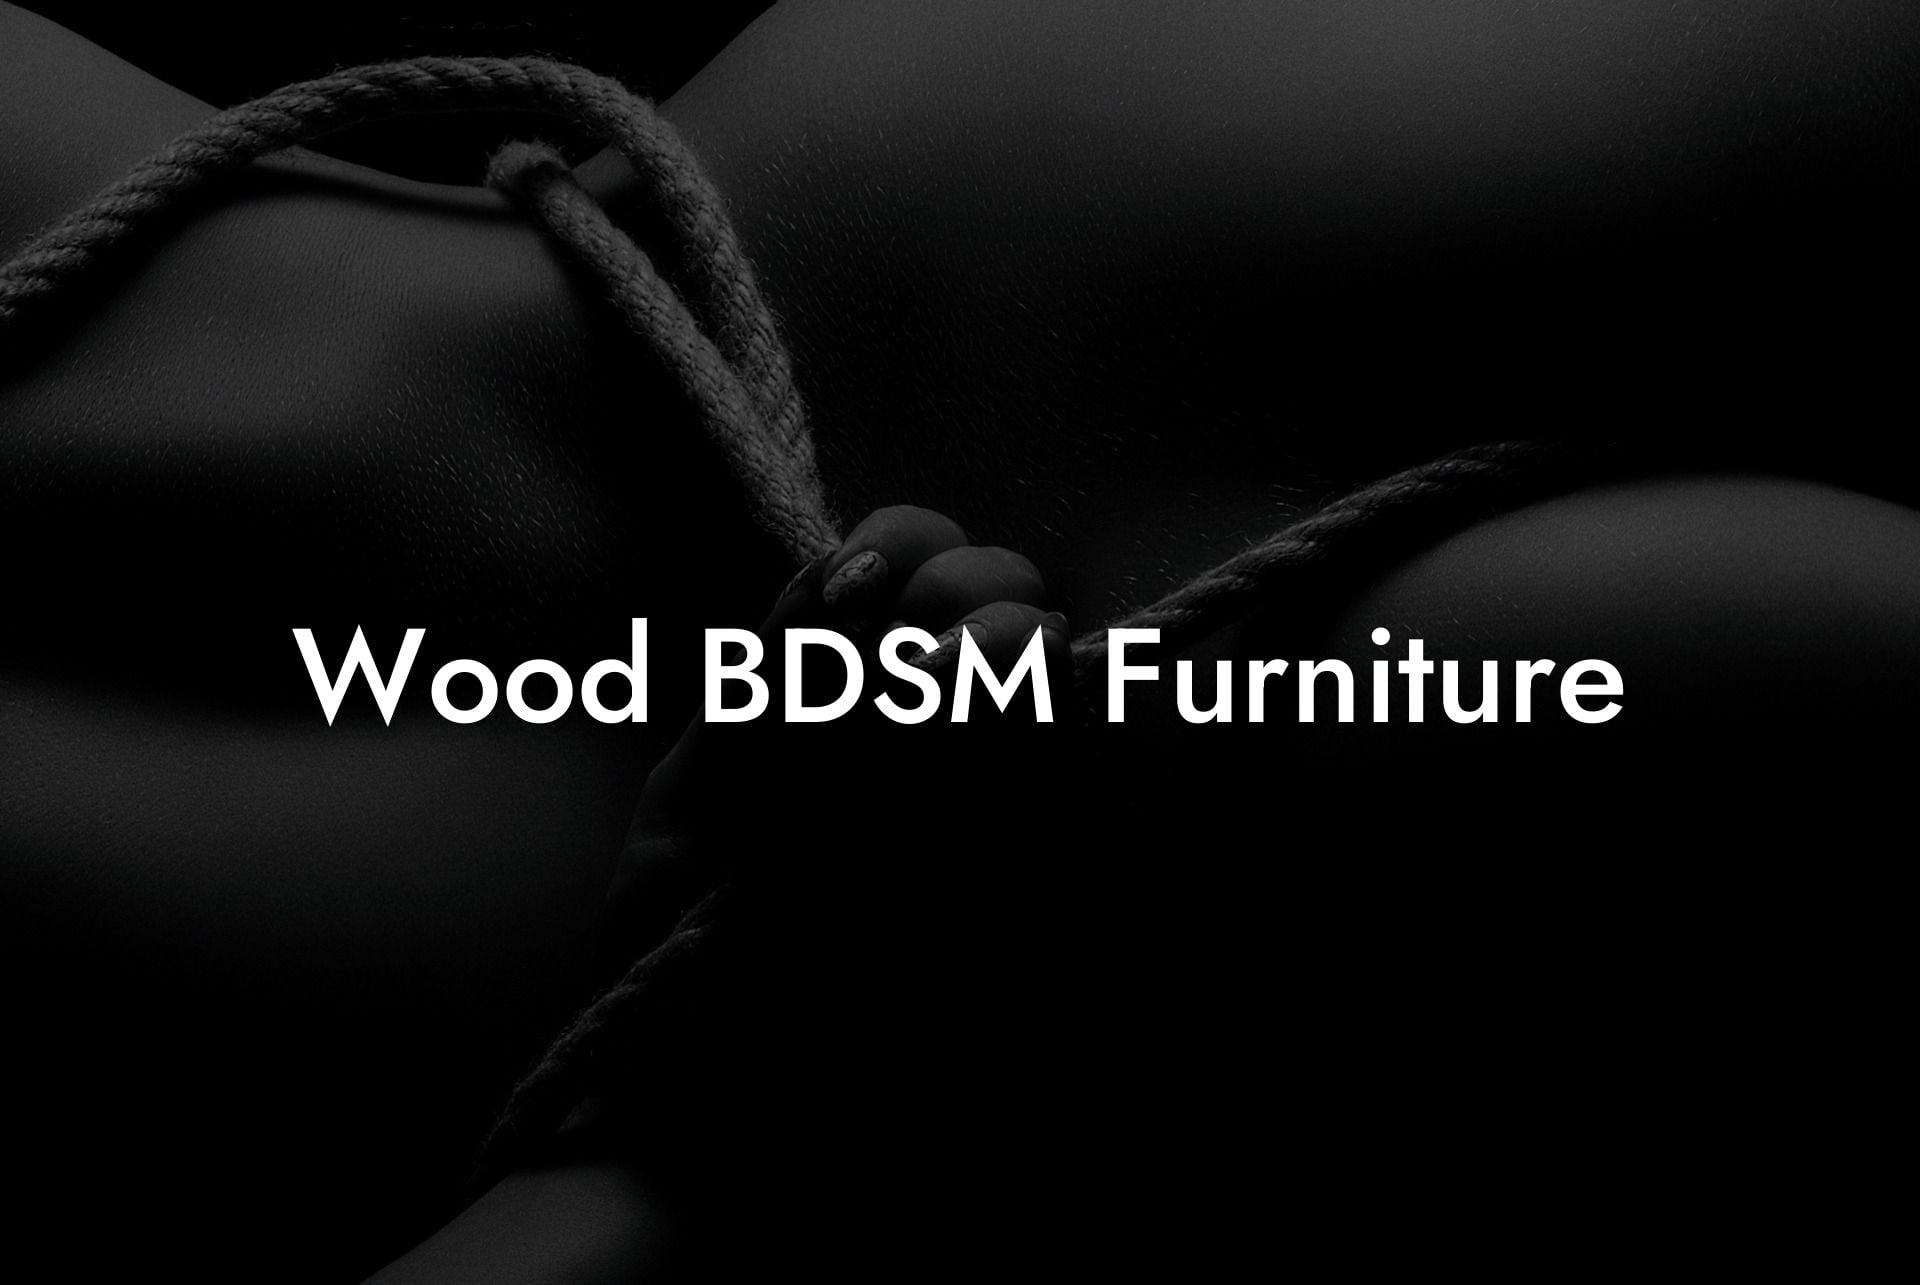 Wood BDSM Furniture